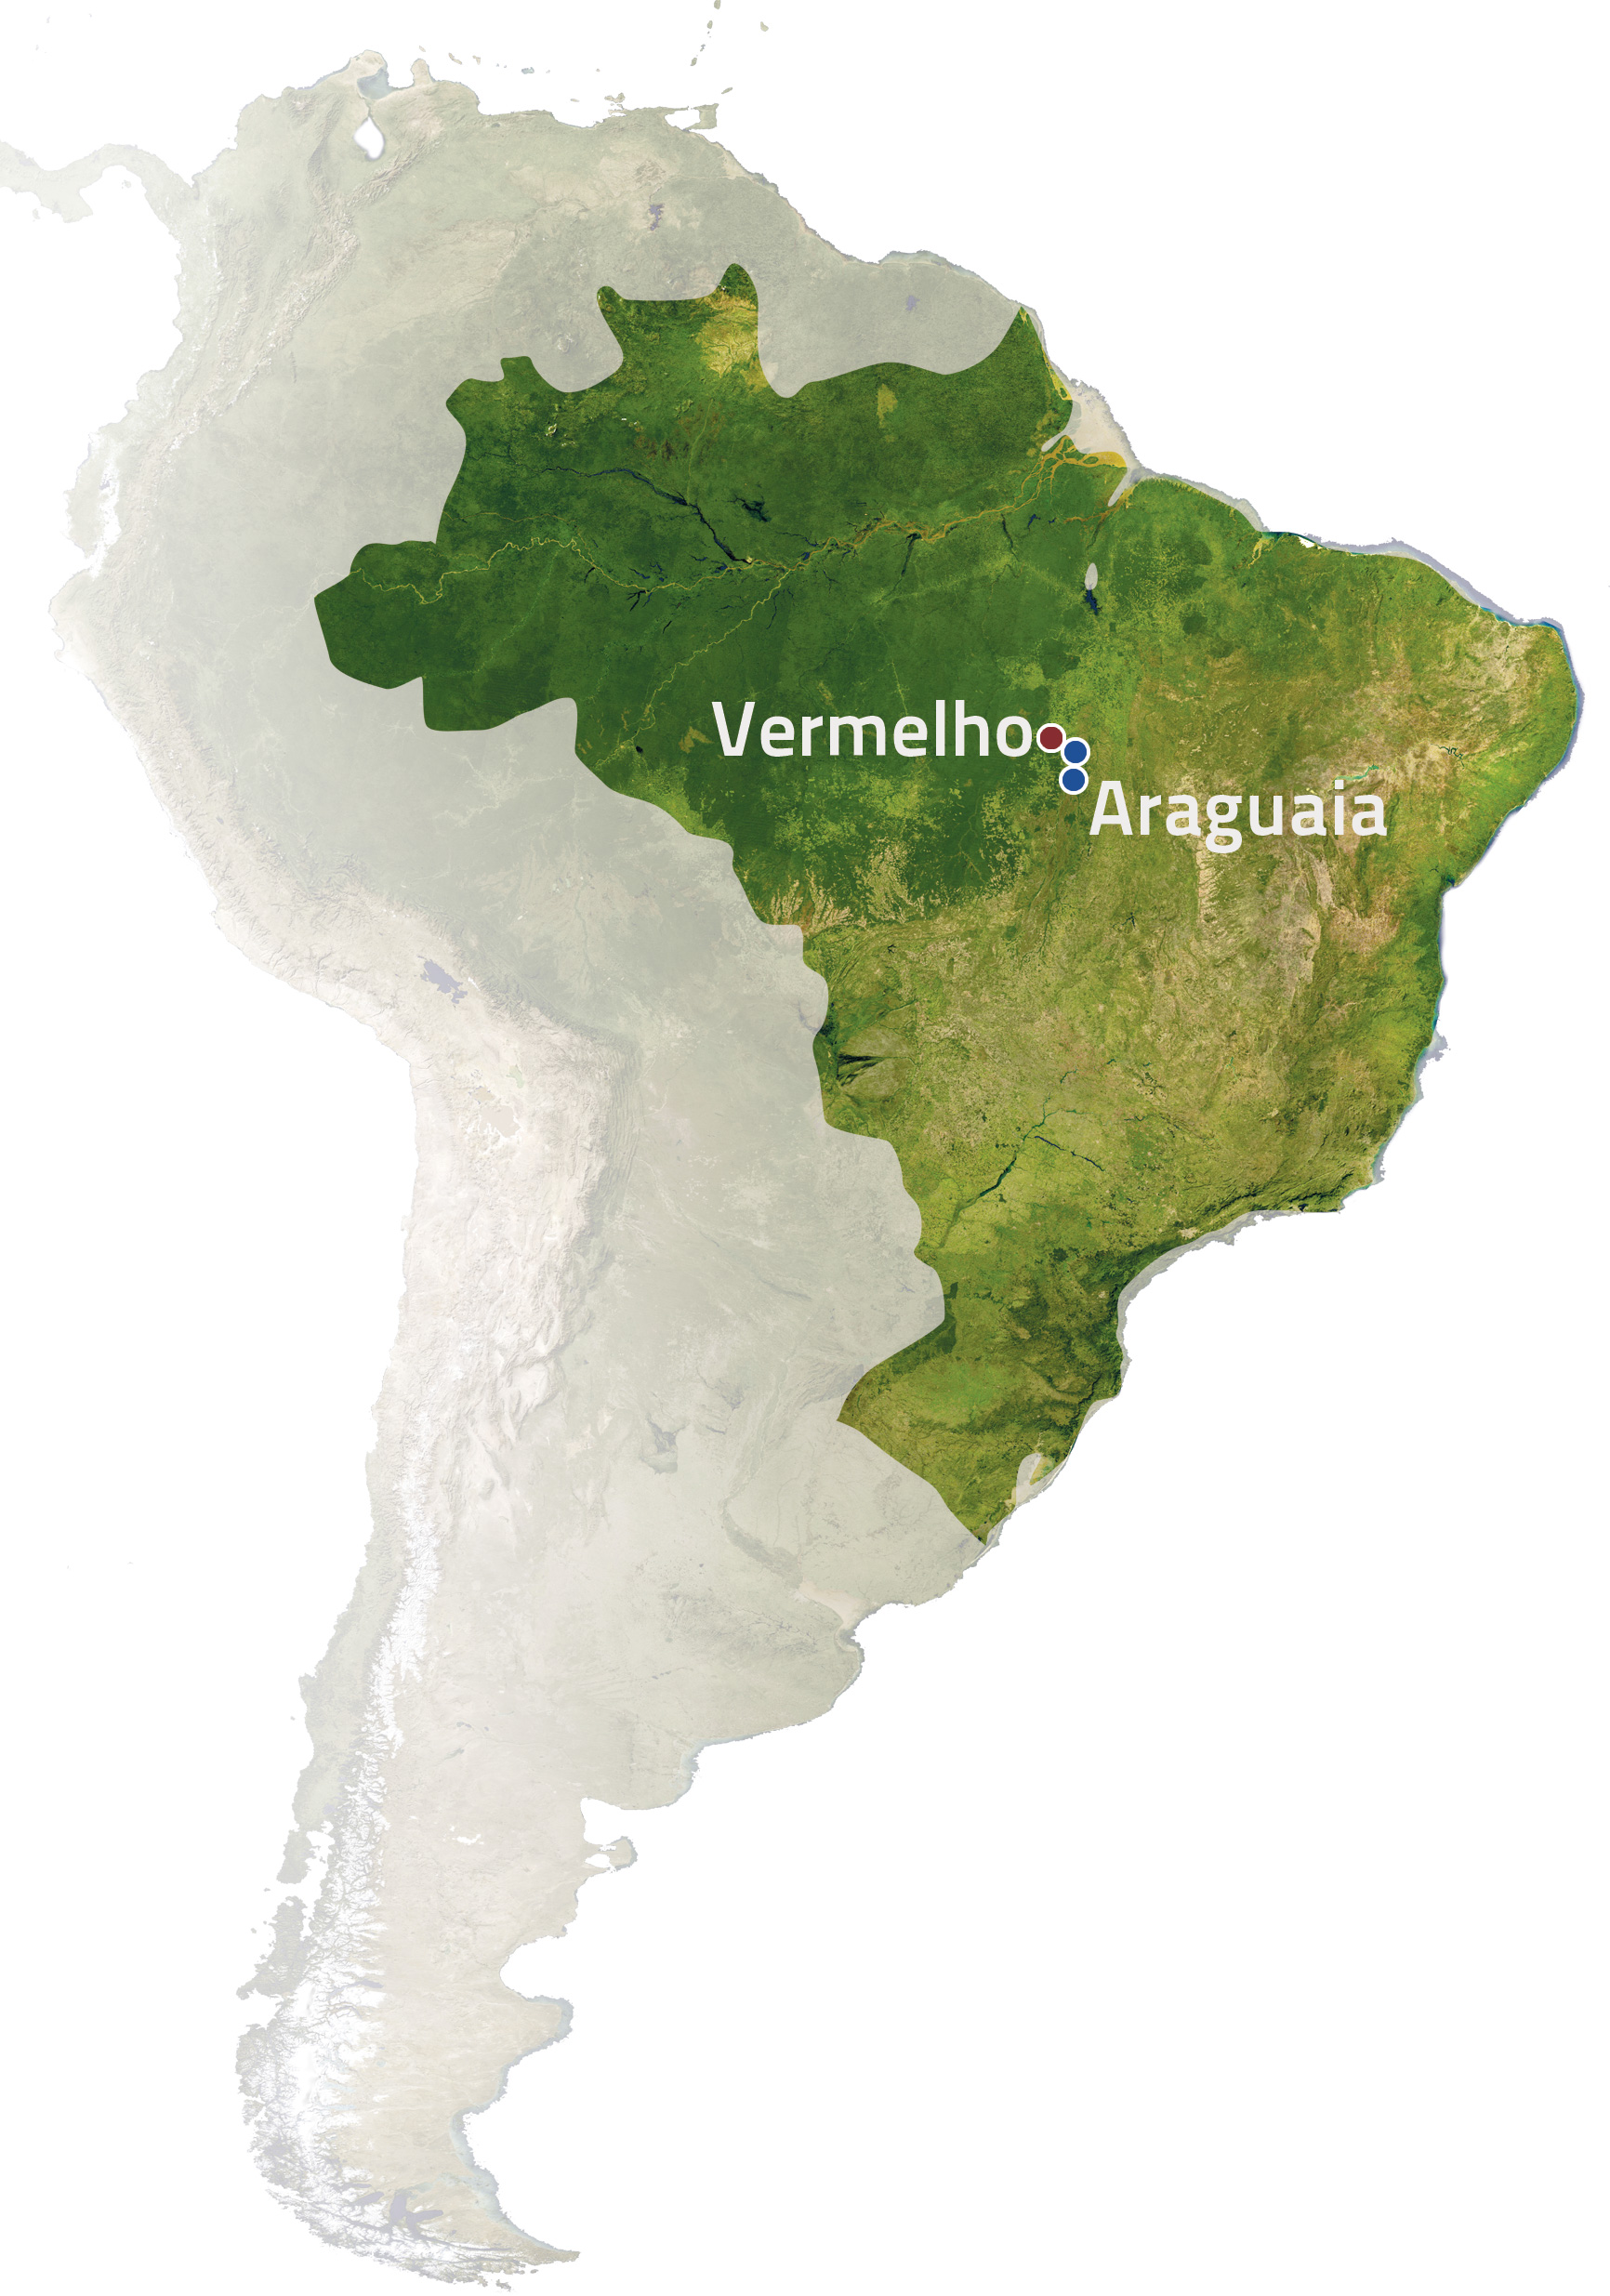 Araguaia and Vermelho nickel project locations, Brazil